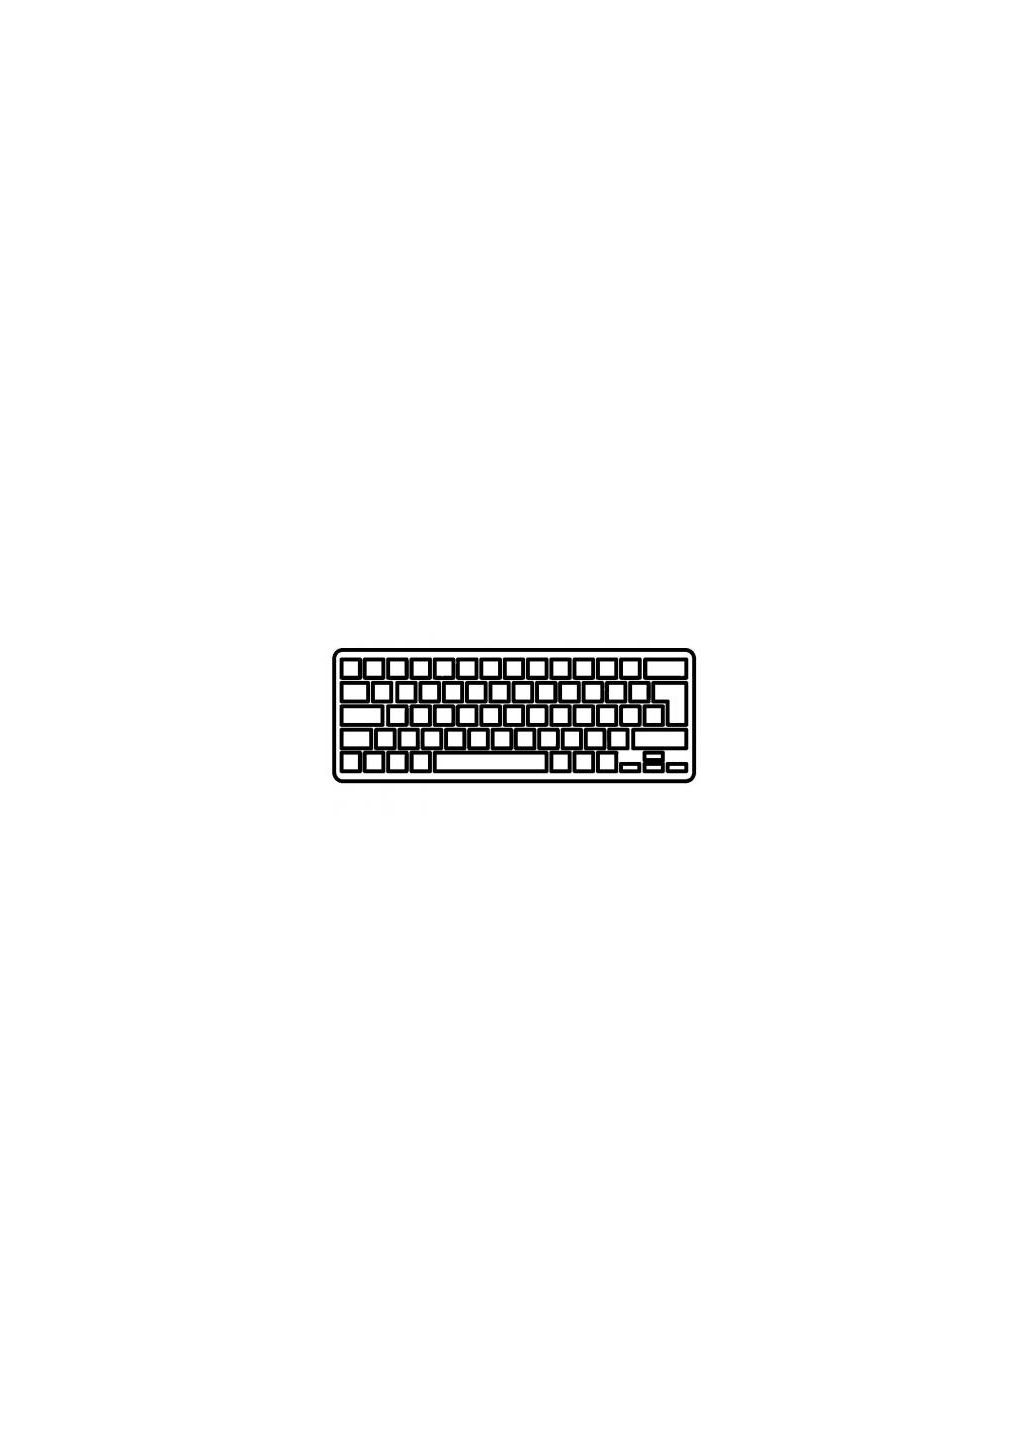 Клавиатура ноутбука Pavilion dv77000 черная без рамки RU (A43490) HP pavilion dv7-7000 черная без рамки ru (276707721)